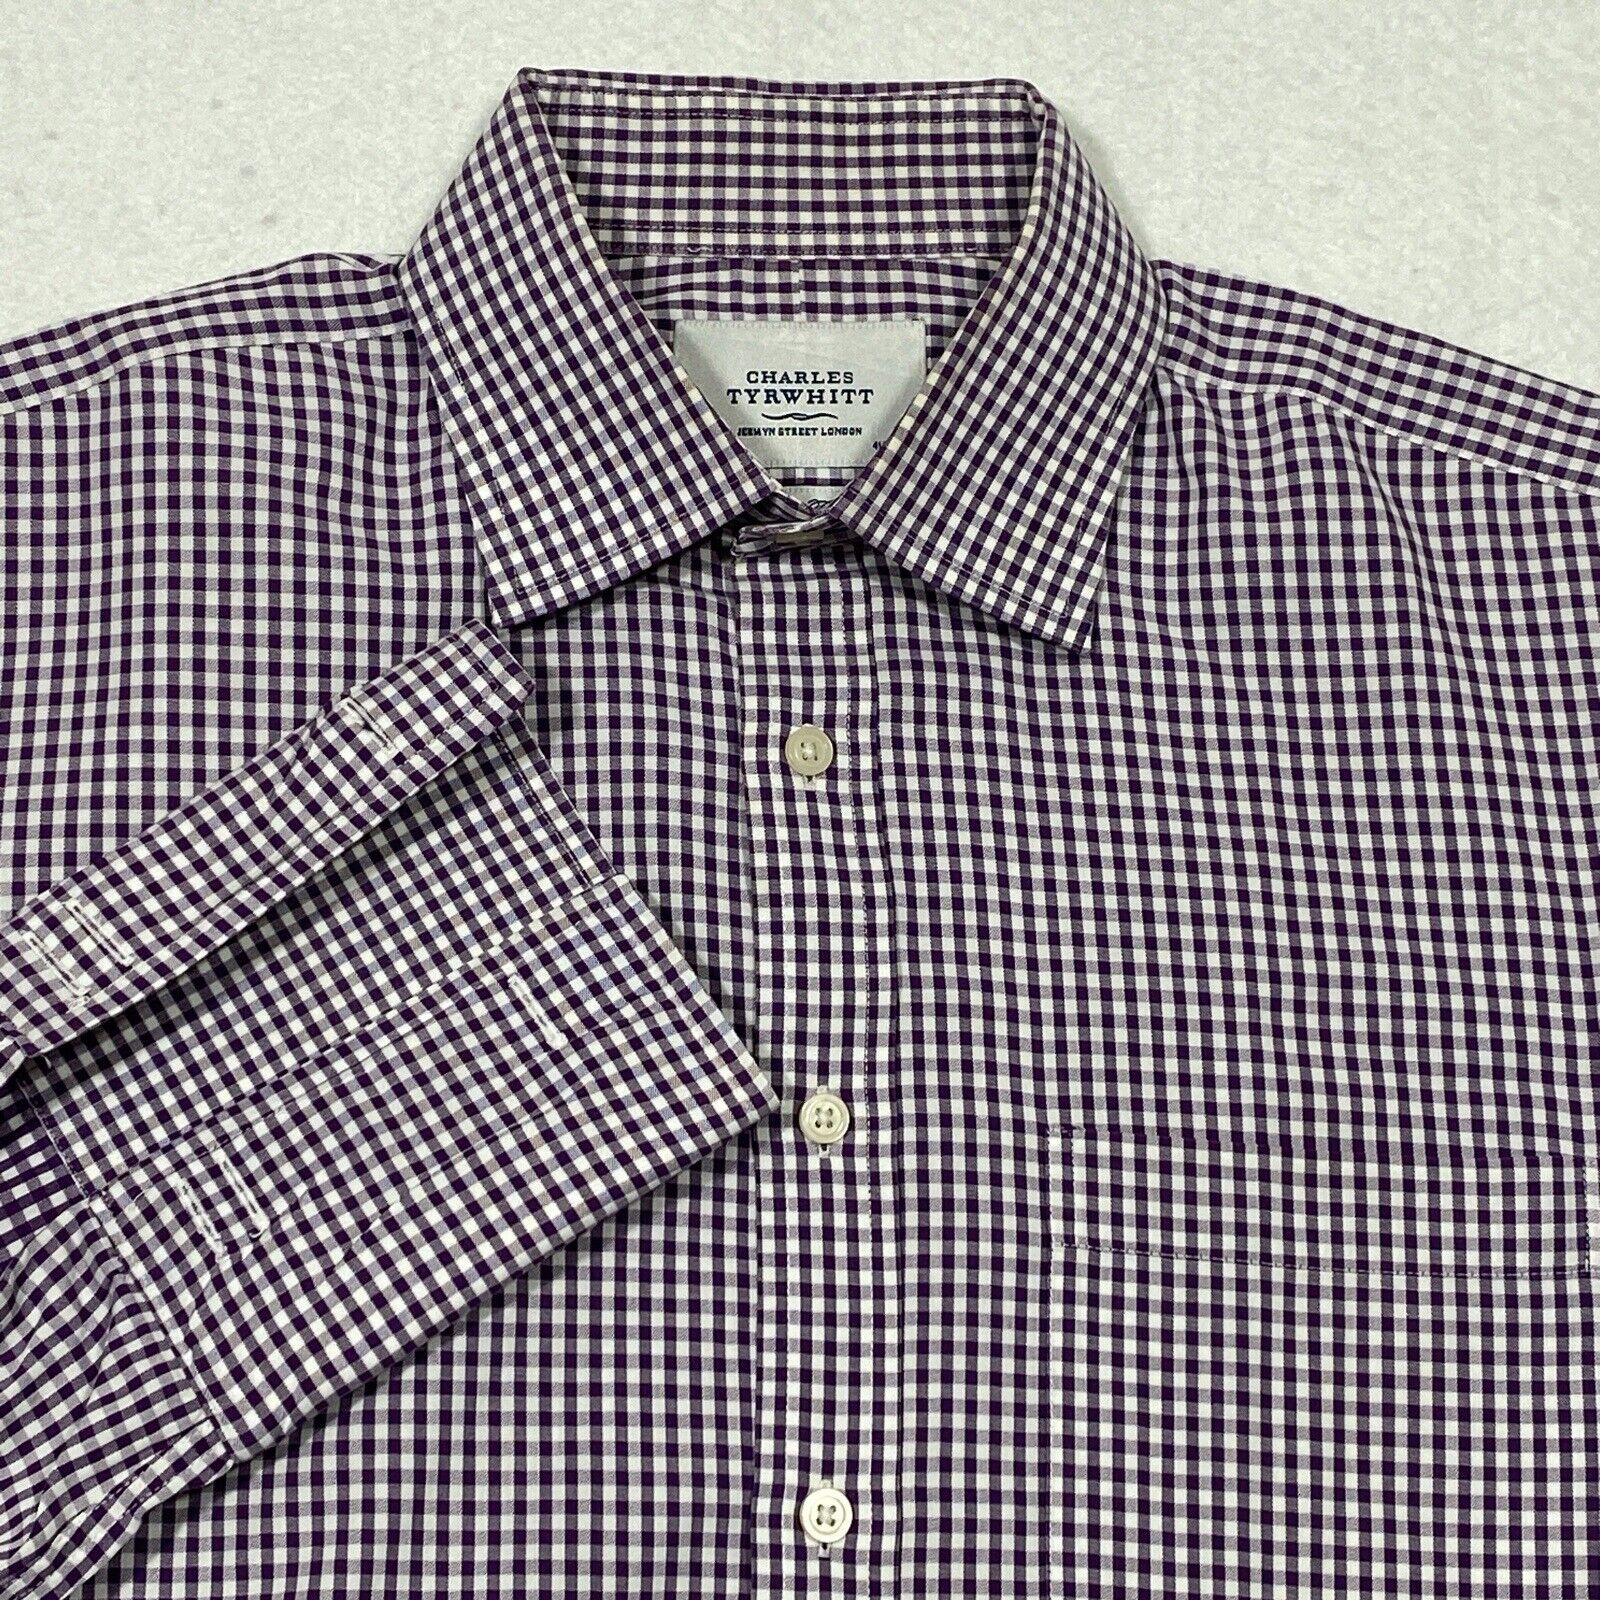 Charles Tyrwhitt Slim Fit Dress Shirt Men’s 16 - 34 Purple Check French Cuff